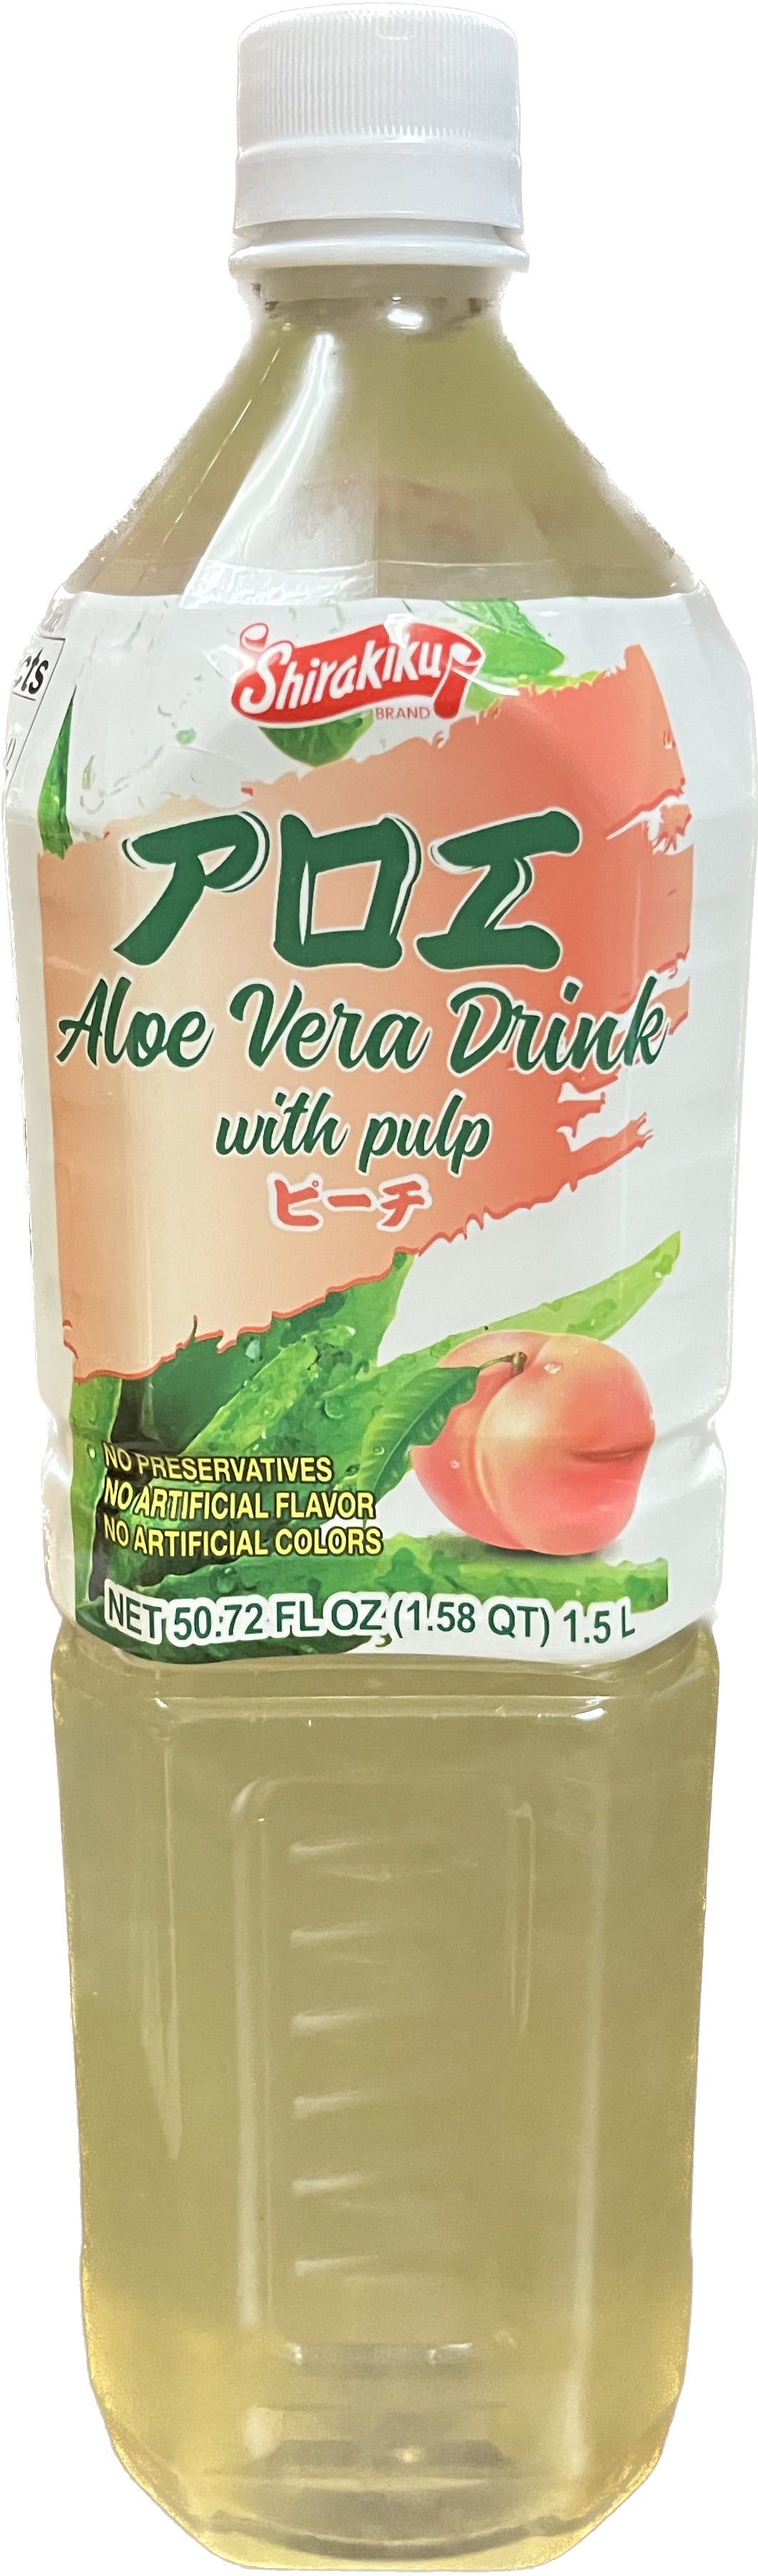 Shirakiku Peach Aloe Vera Drink with pulp - 1.5L